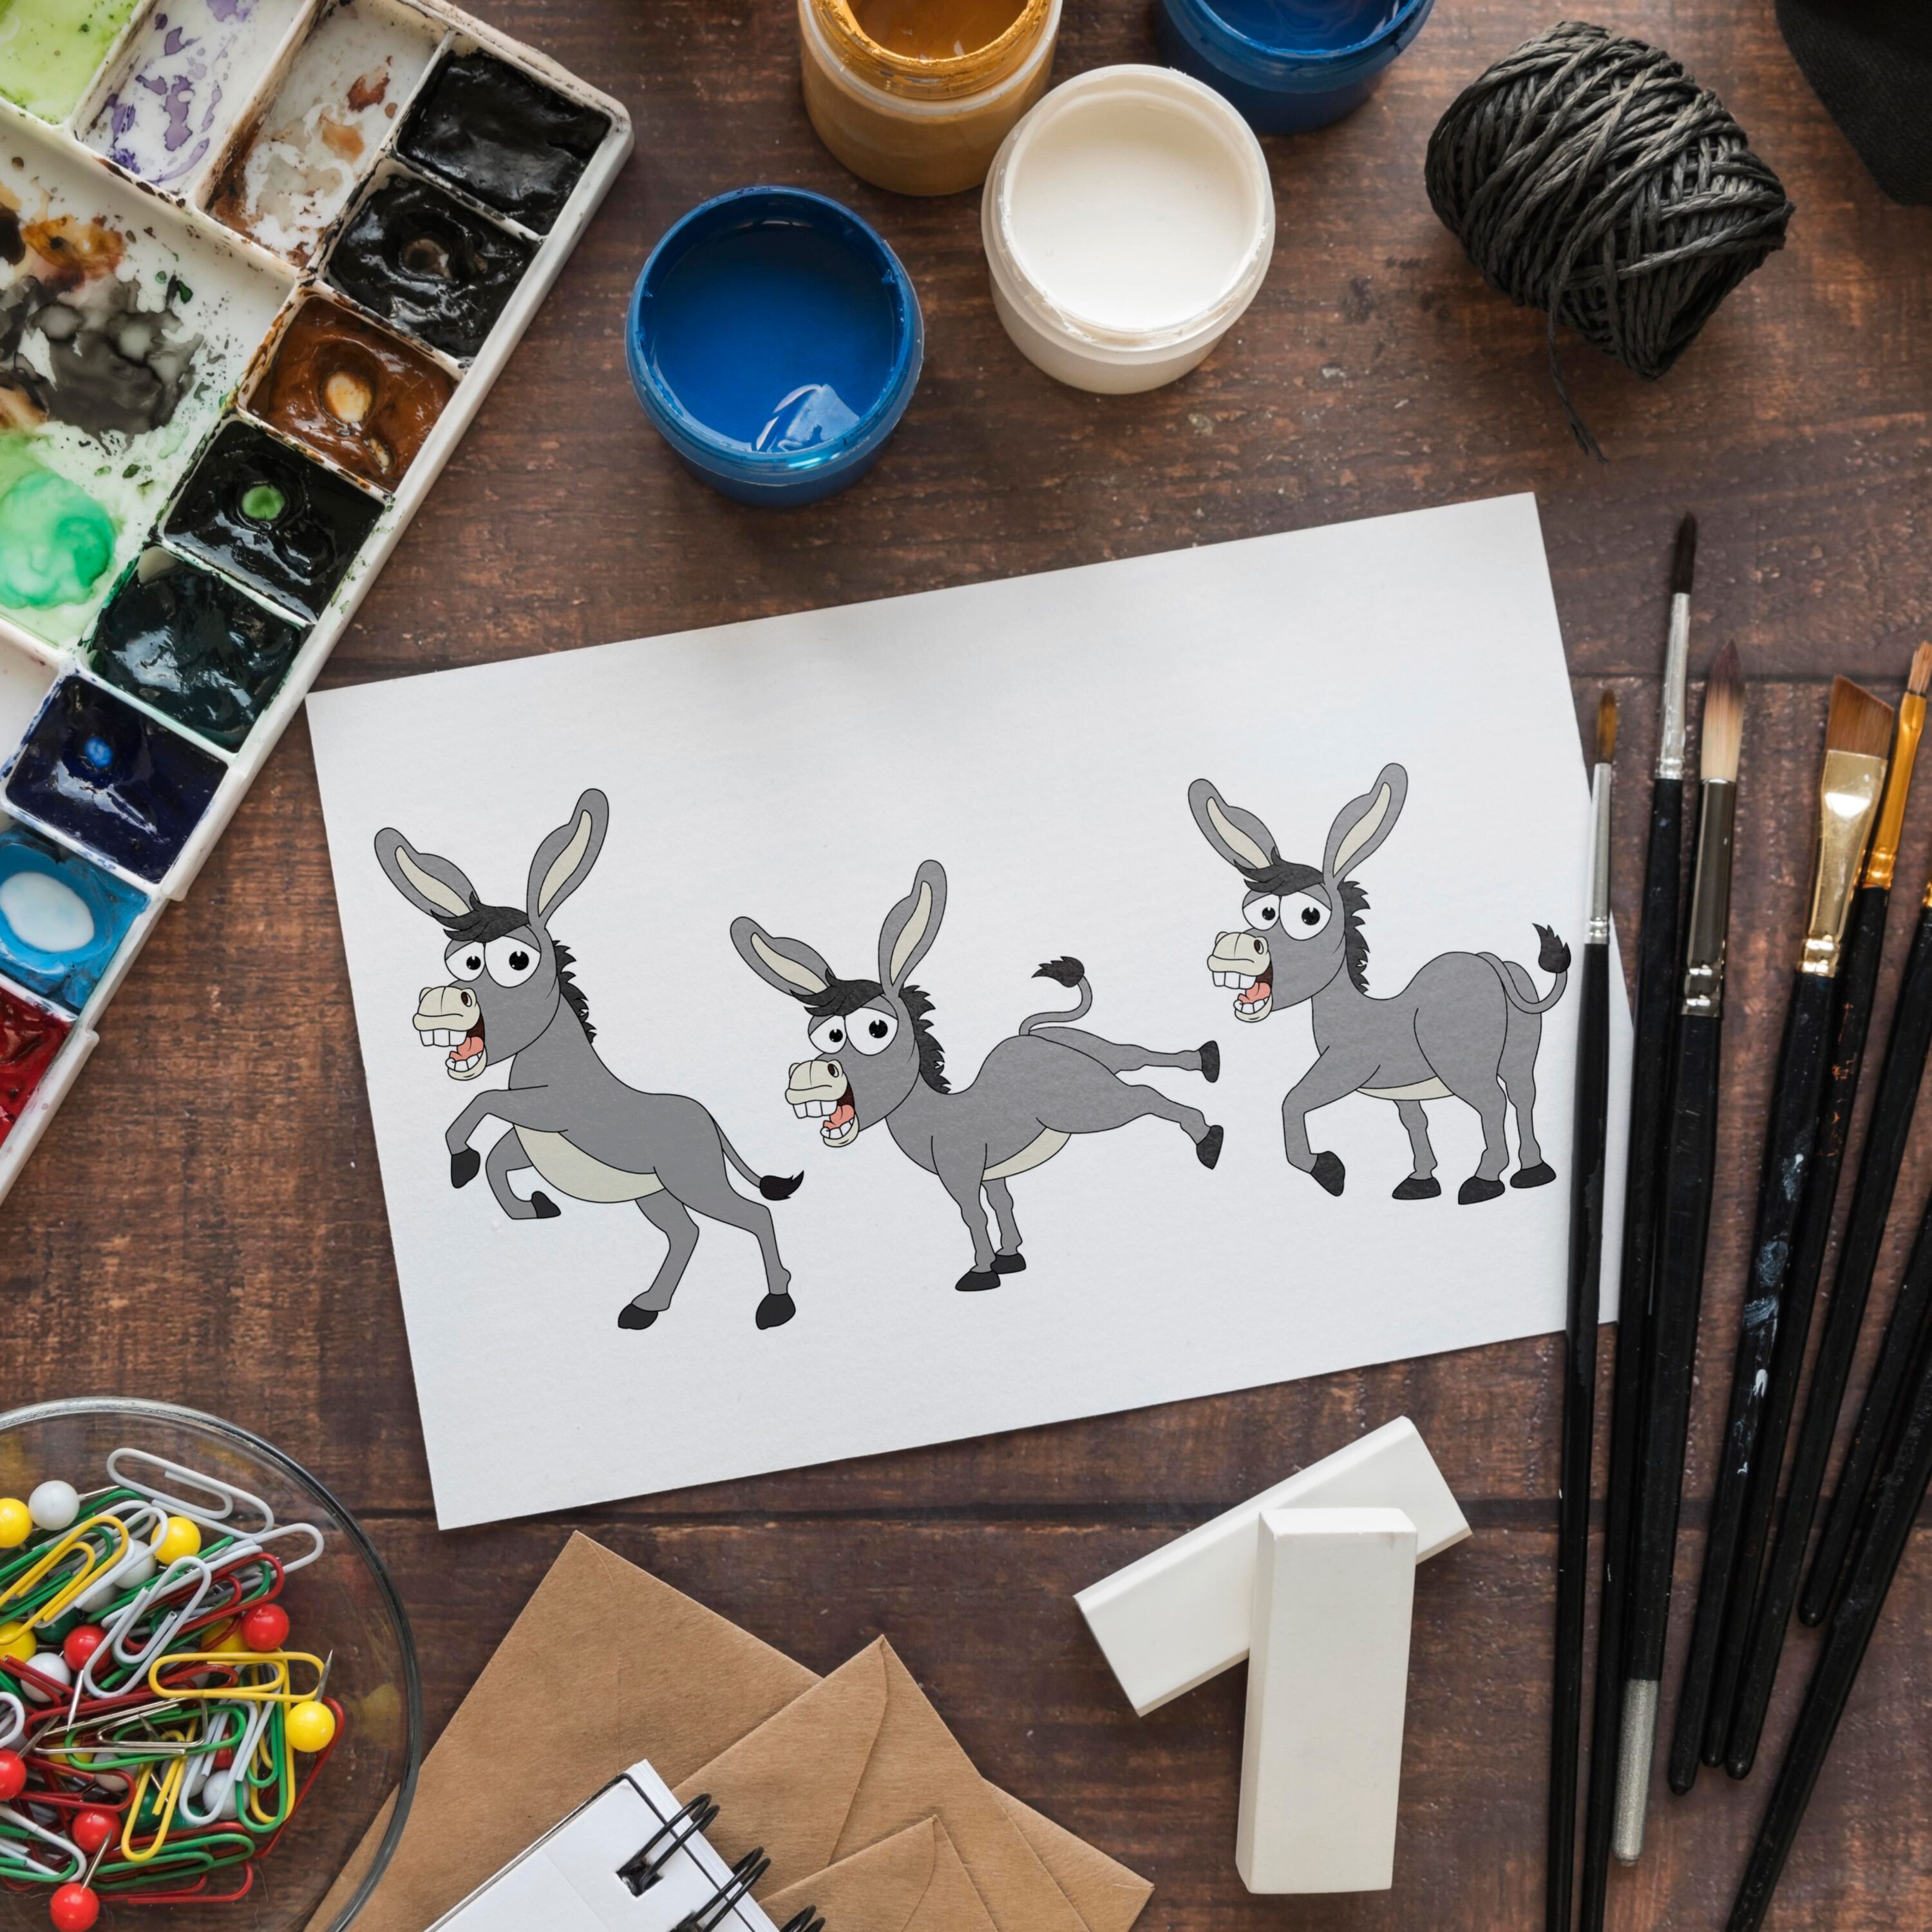 cute donkey animal cartoon graphic cover.